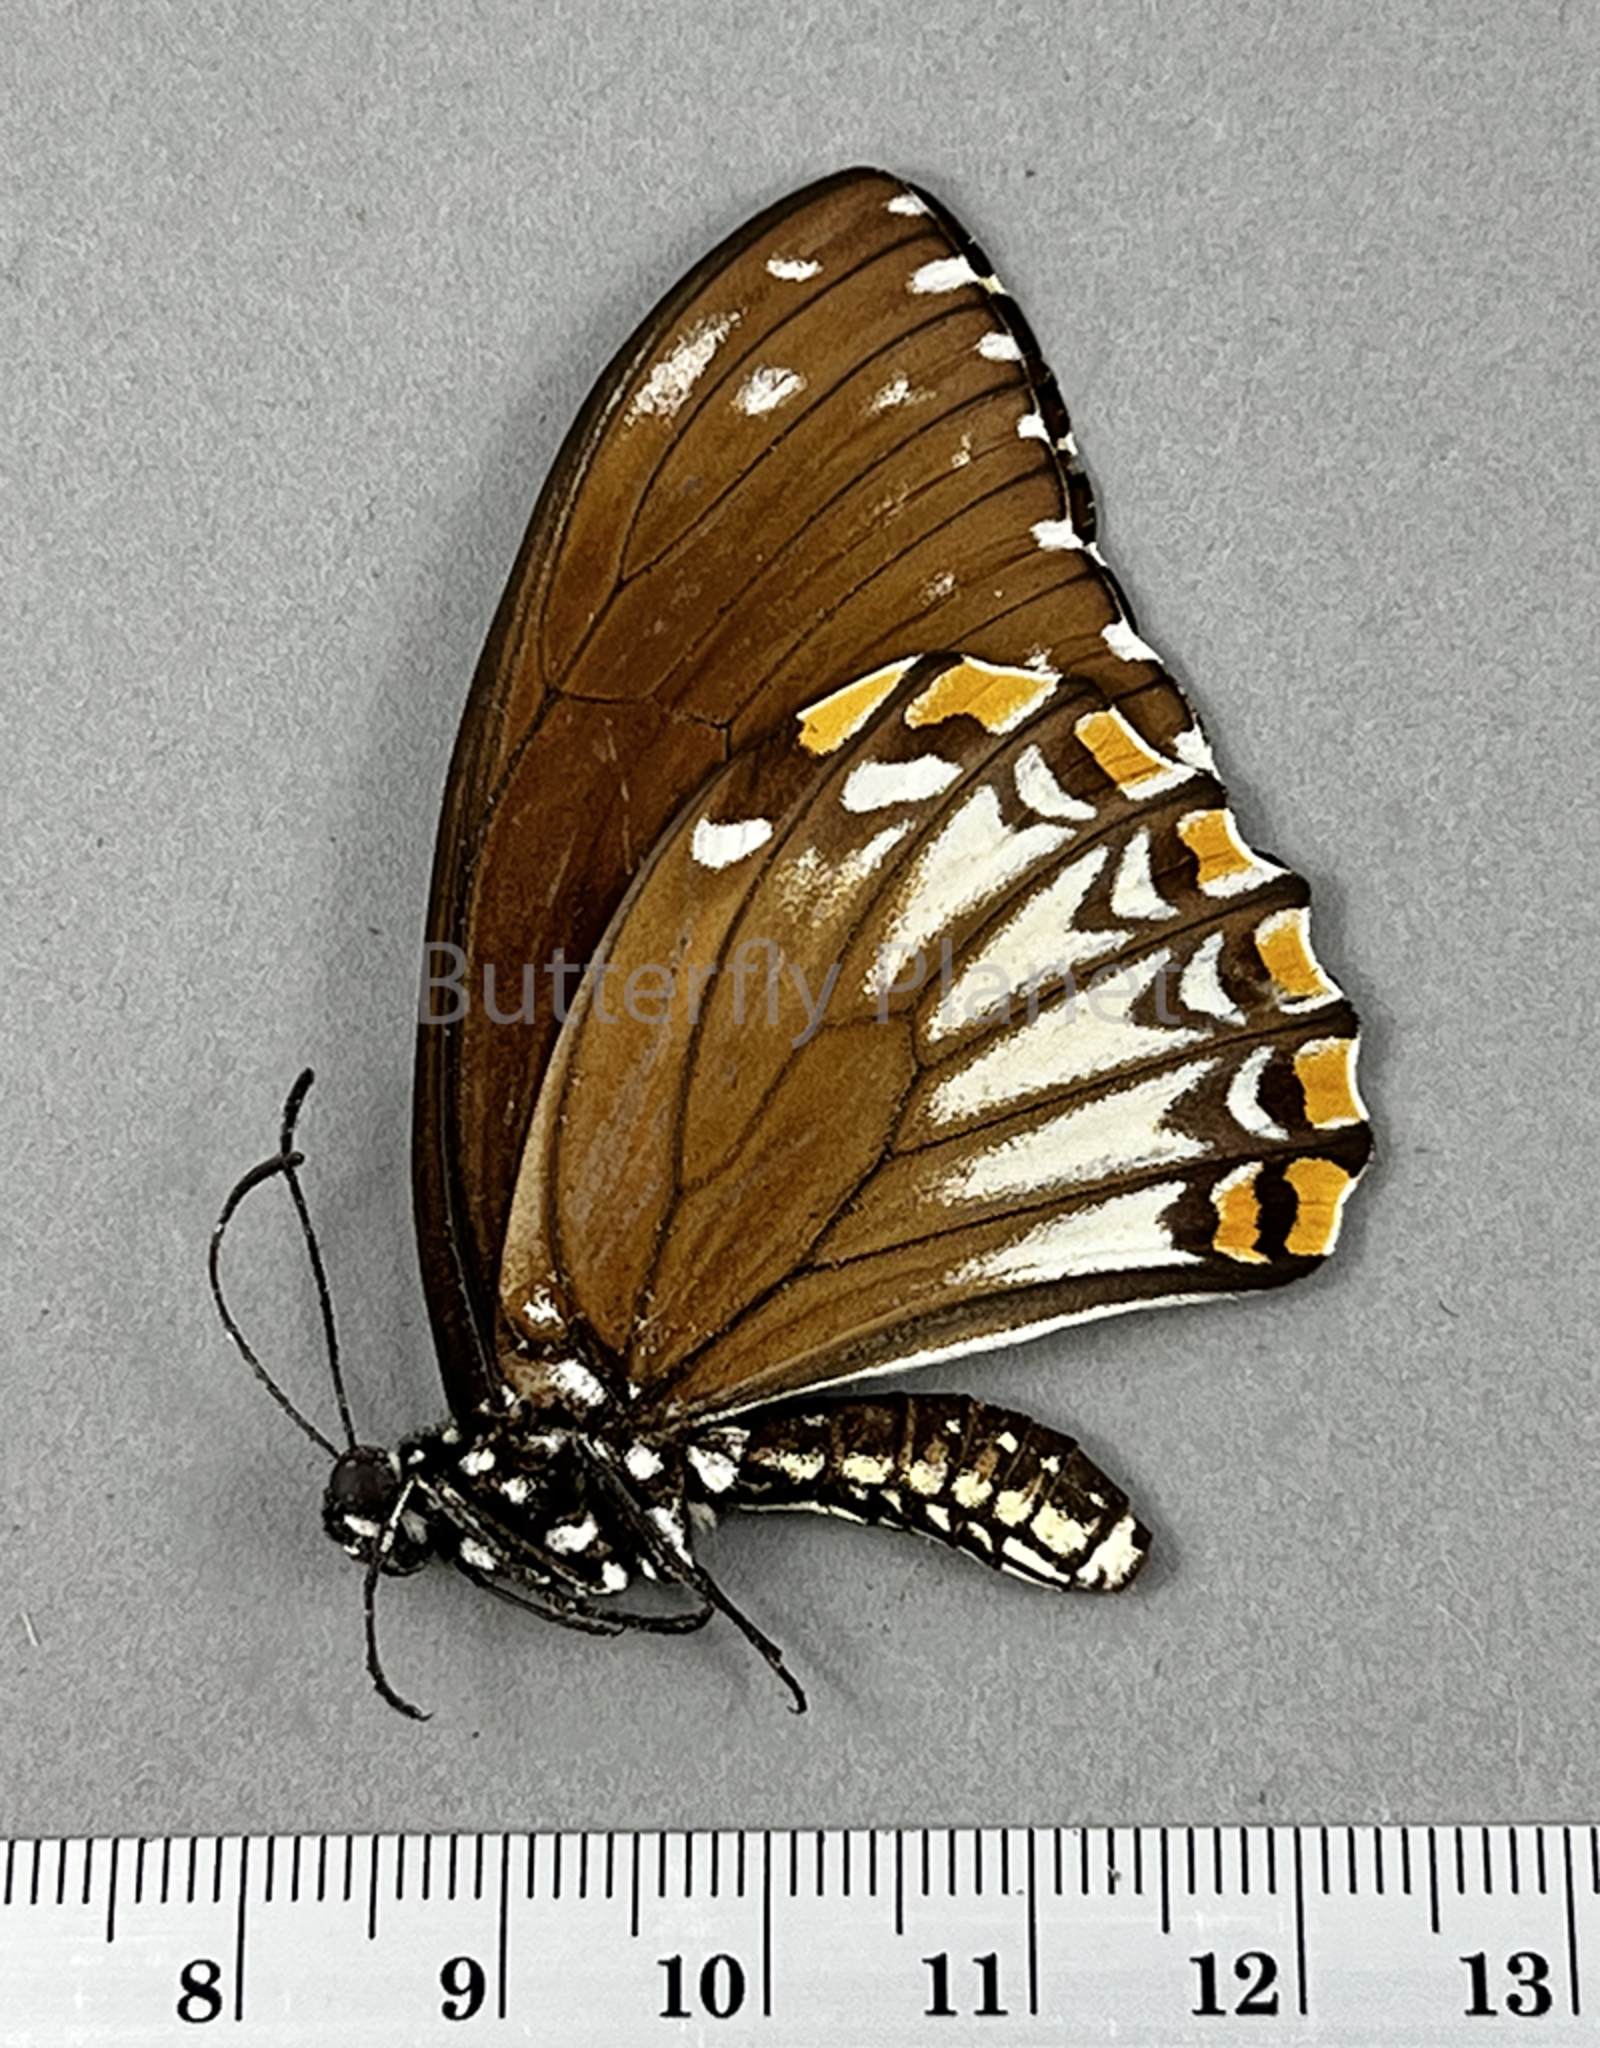 Chilasa clytia lankeswara brown form M A1 Sri Lanka